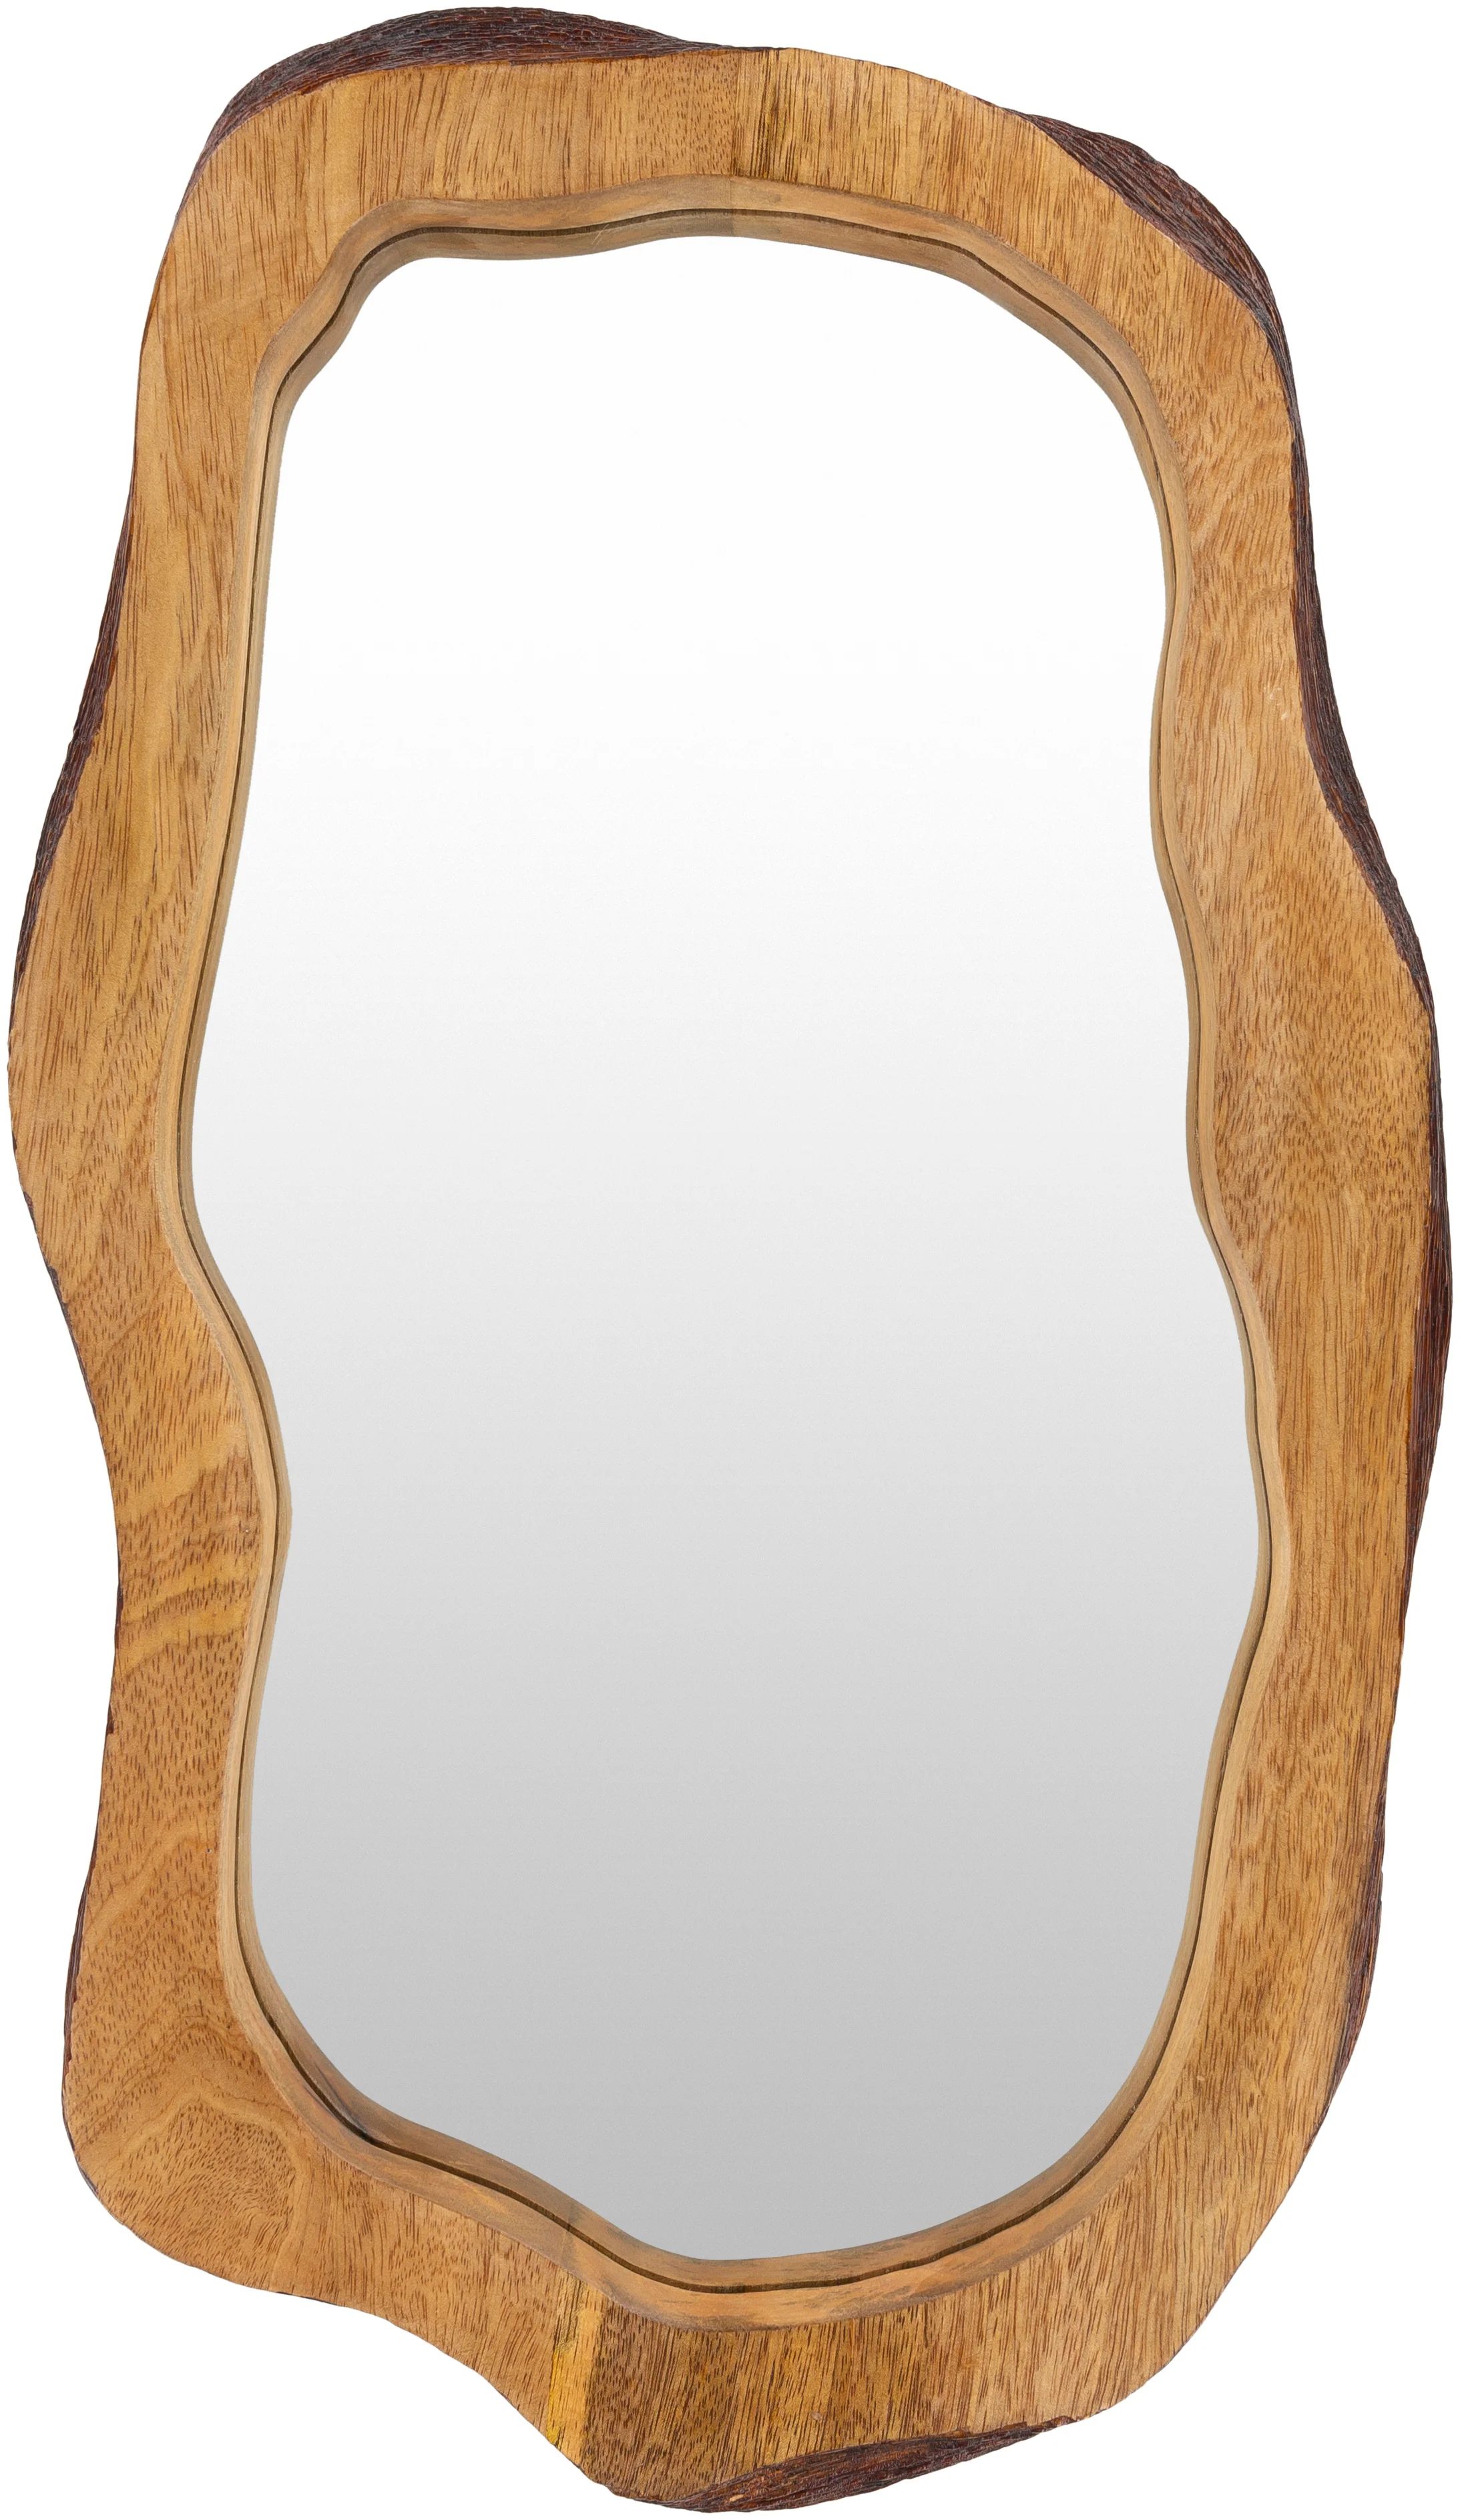 Edge Wood Natural Mirror 1'8"H x 1'0"W | Burke Decor